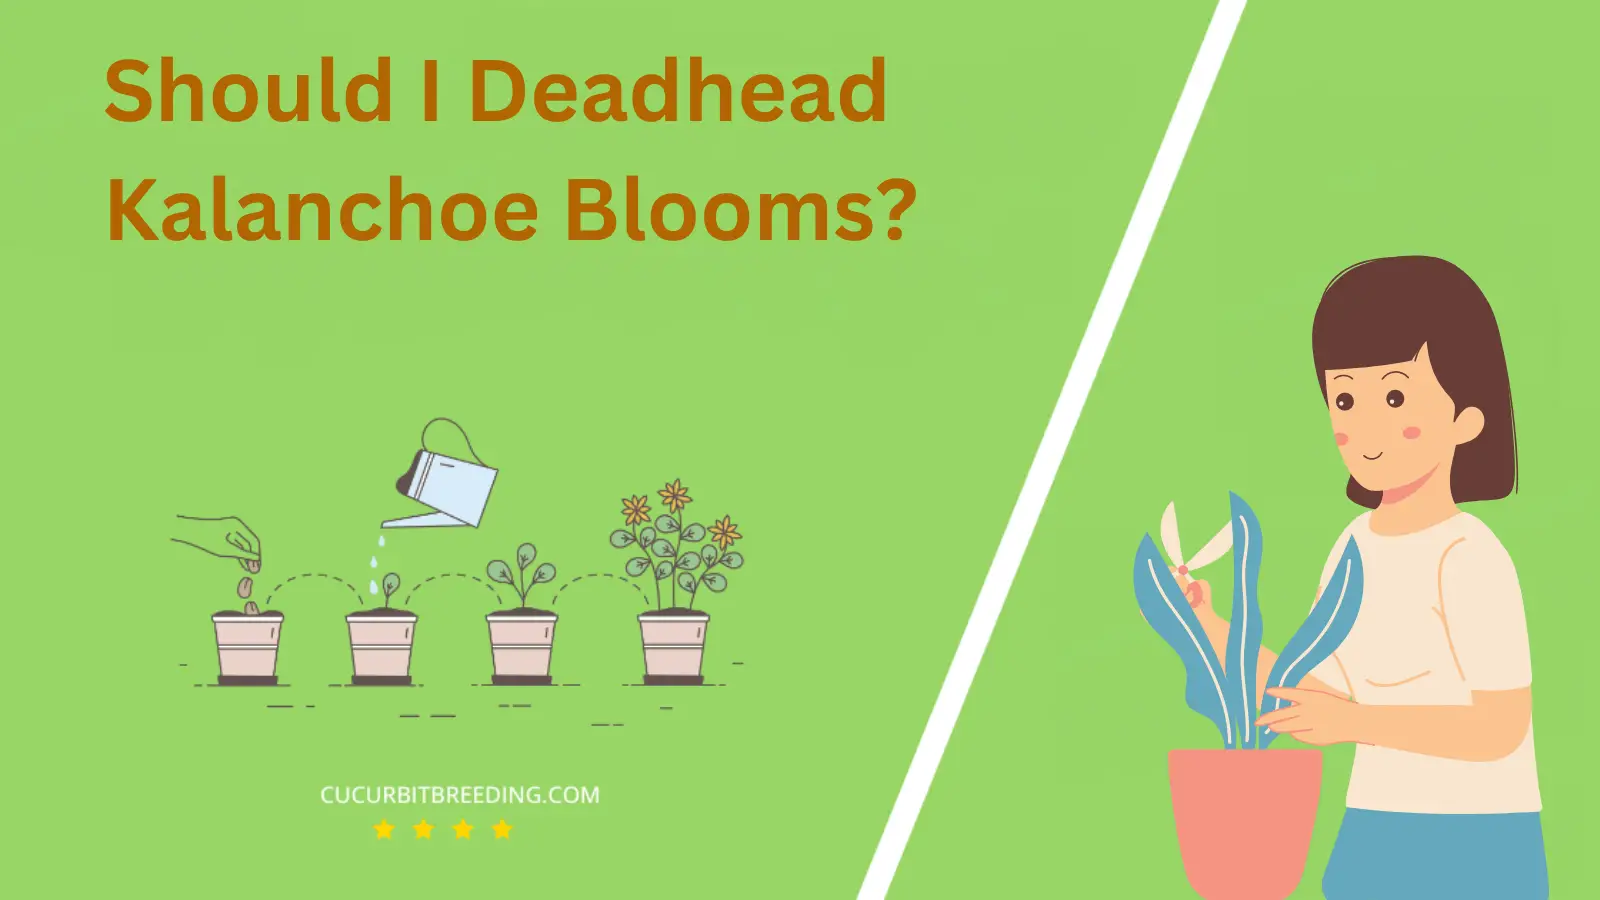 Should I Deadhead Kalanchoe Blooms?